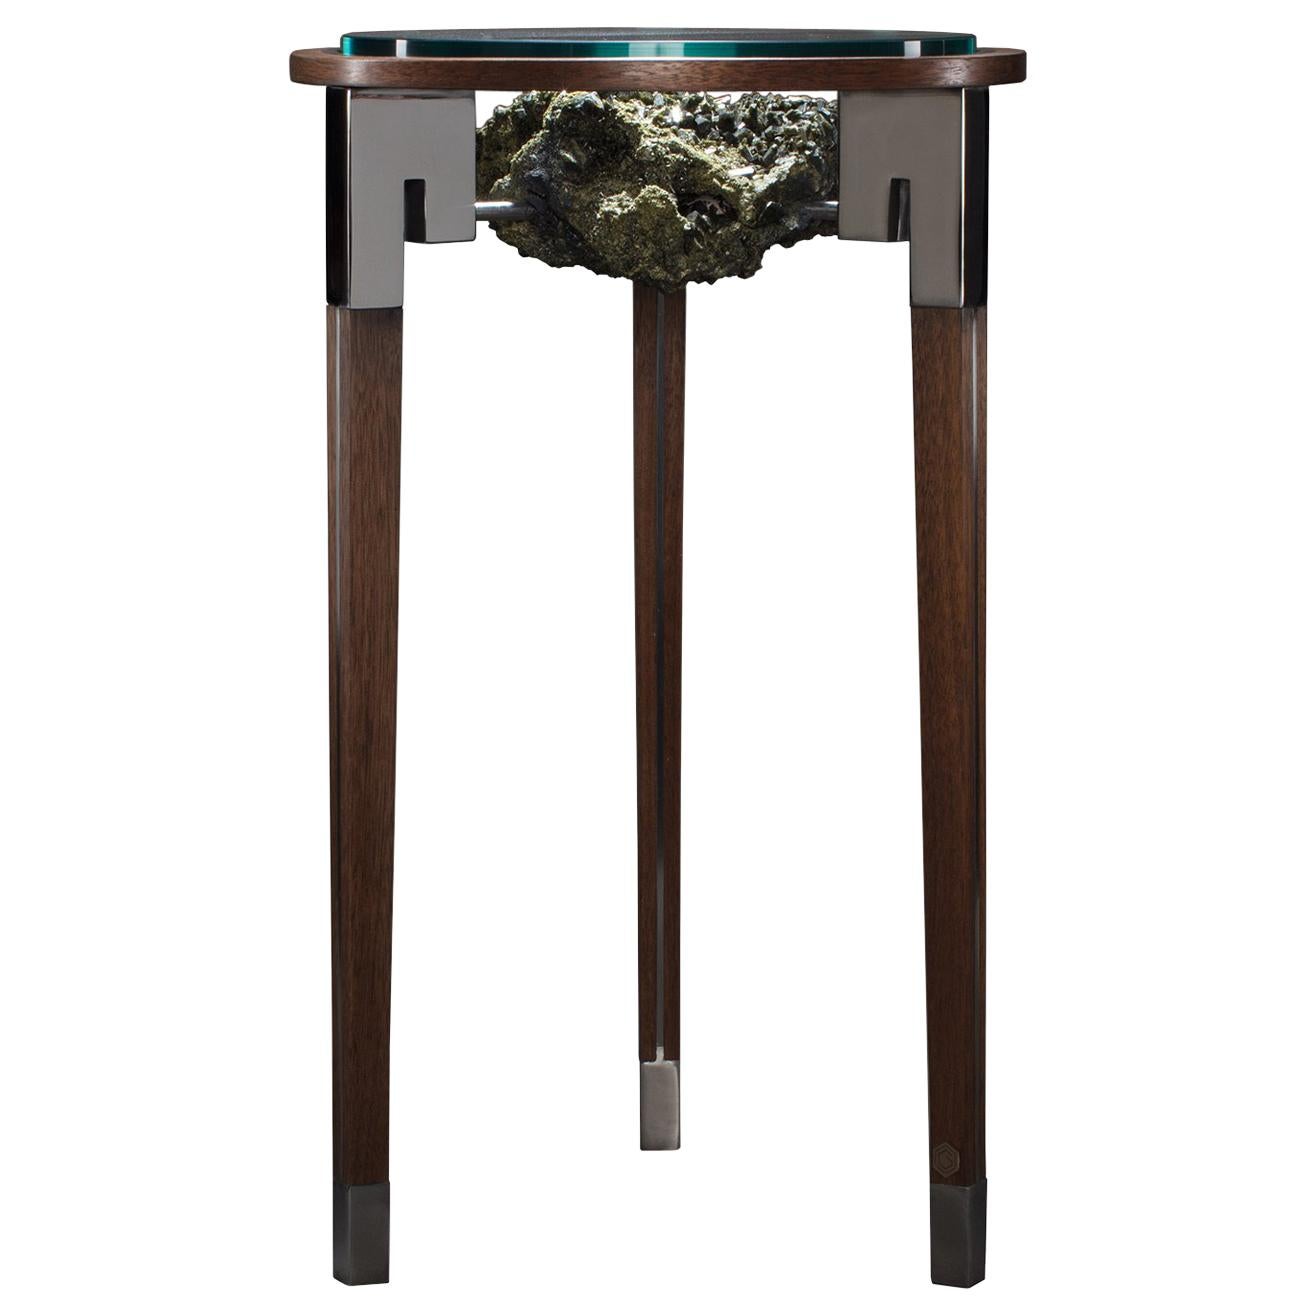 Studio Greytak "Classic Peekaboo Table 1" Epidote, Stainless Steel and Walnut